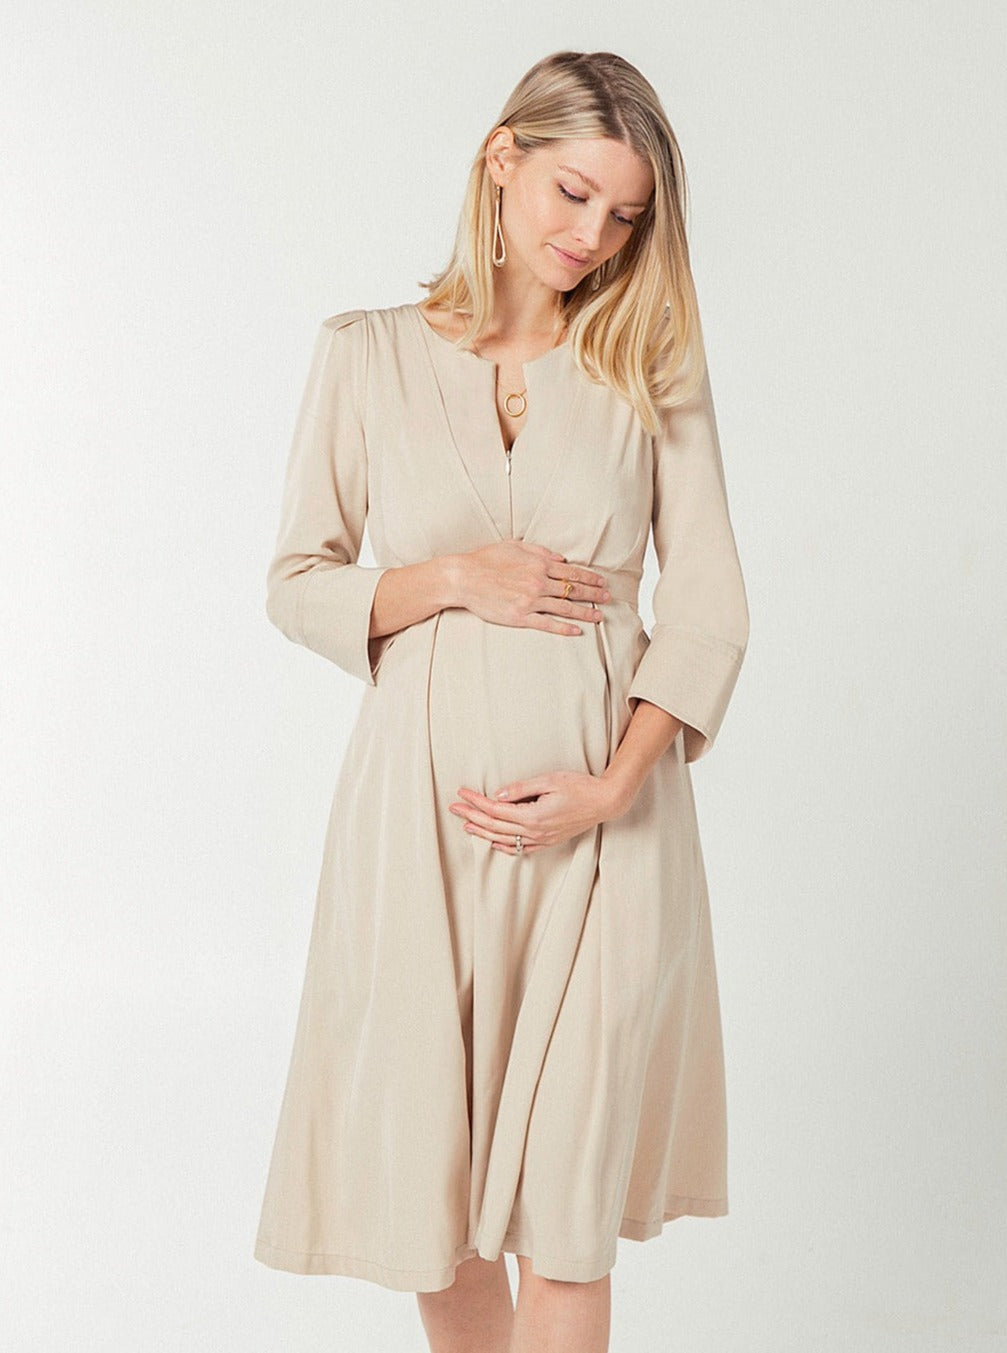 TENCEL maternity dress with empire waist, zipper nursing access, and full skirt with pockets. Beige.